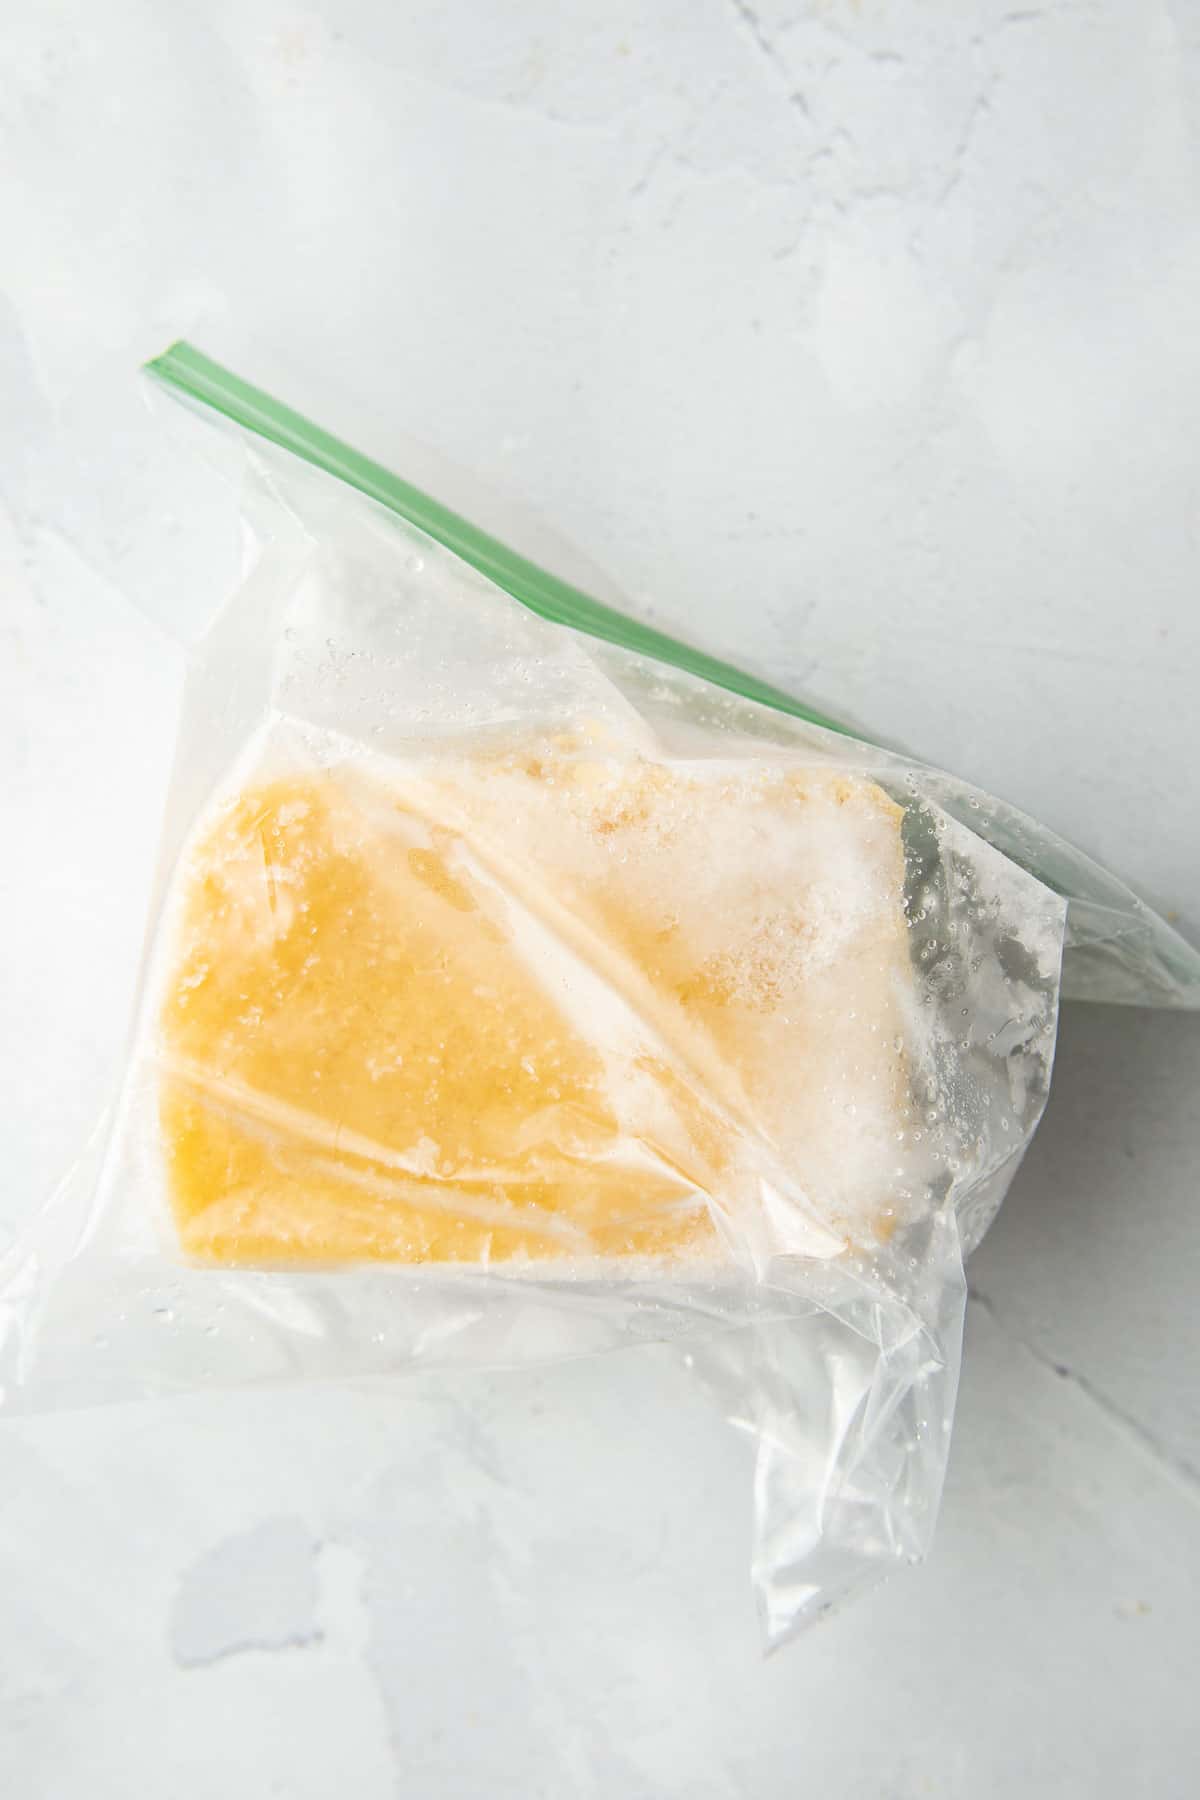 Block of frozen tofu in a zipper bag.